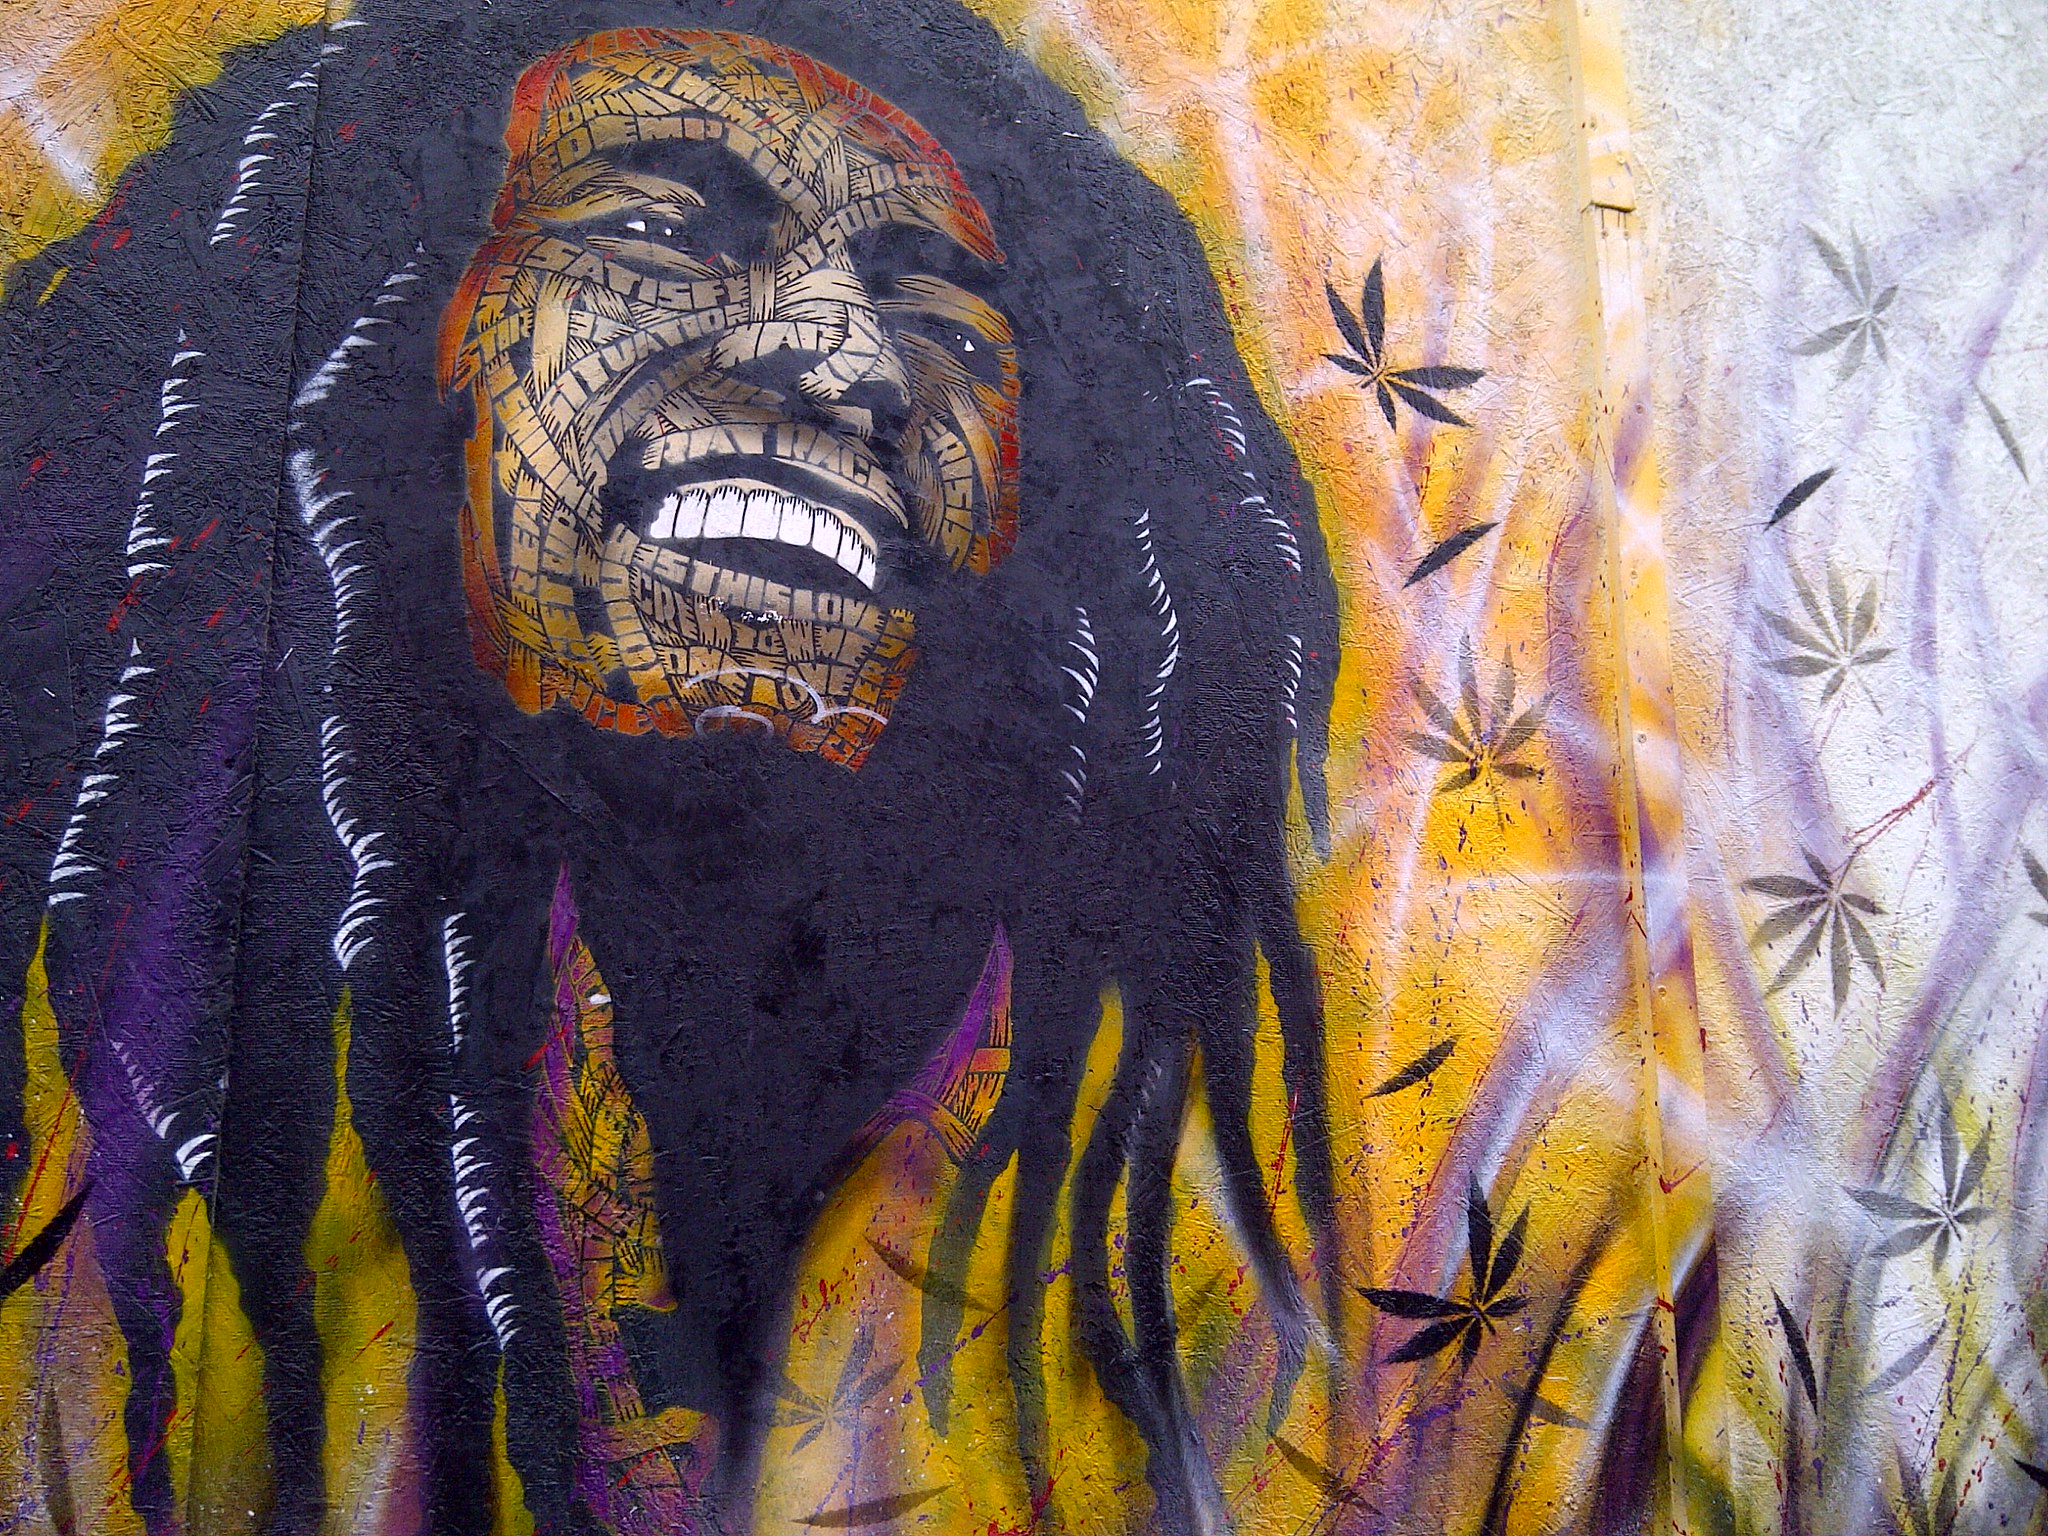 Why hasnt Jamaica made Bob Marley a national hero yet